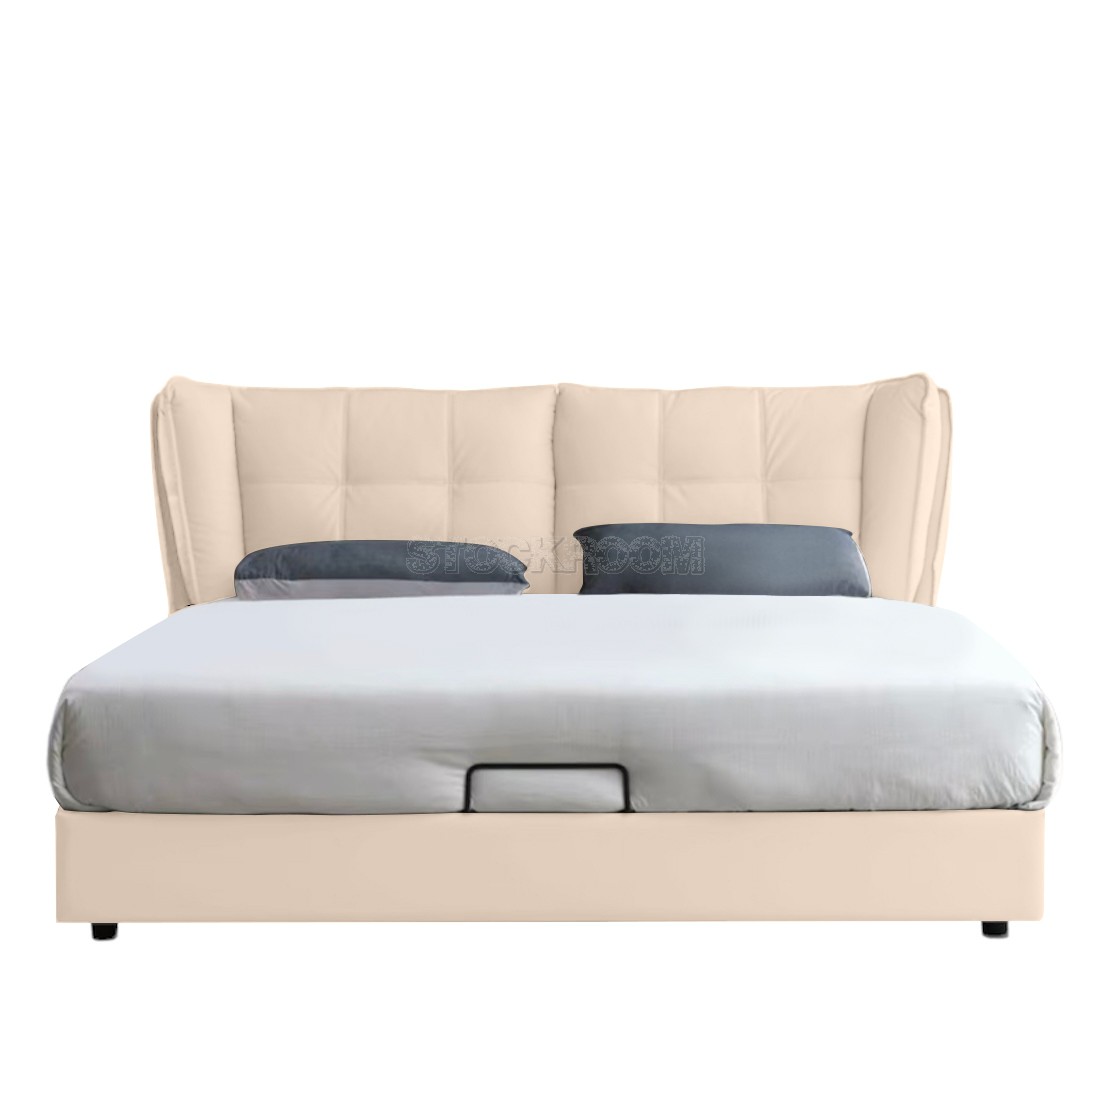 Moreno Fabric Upholstered Bed Frame